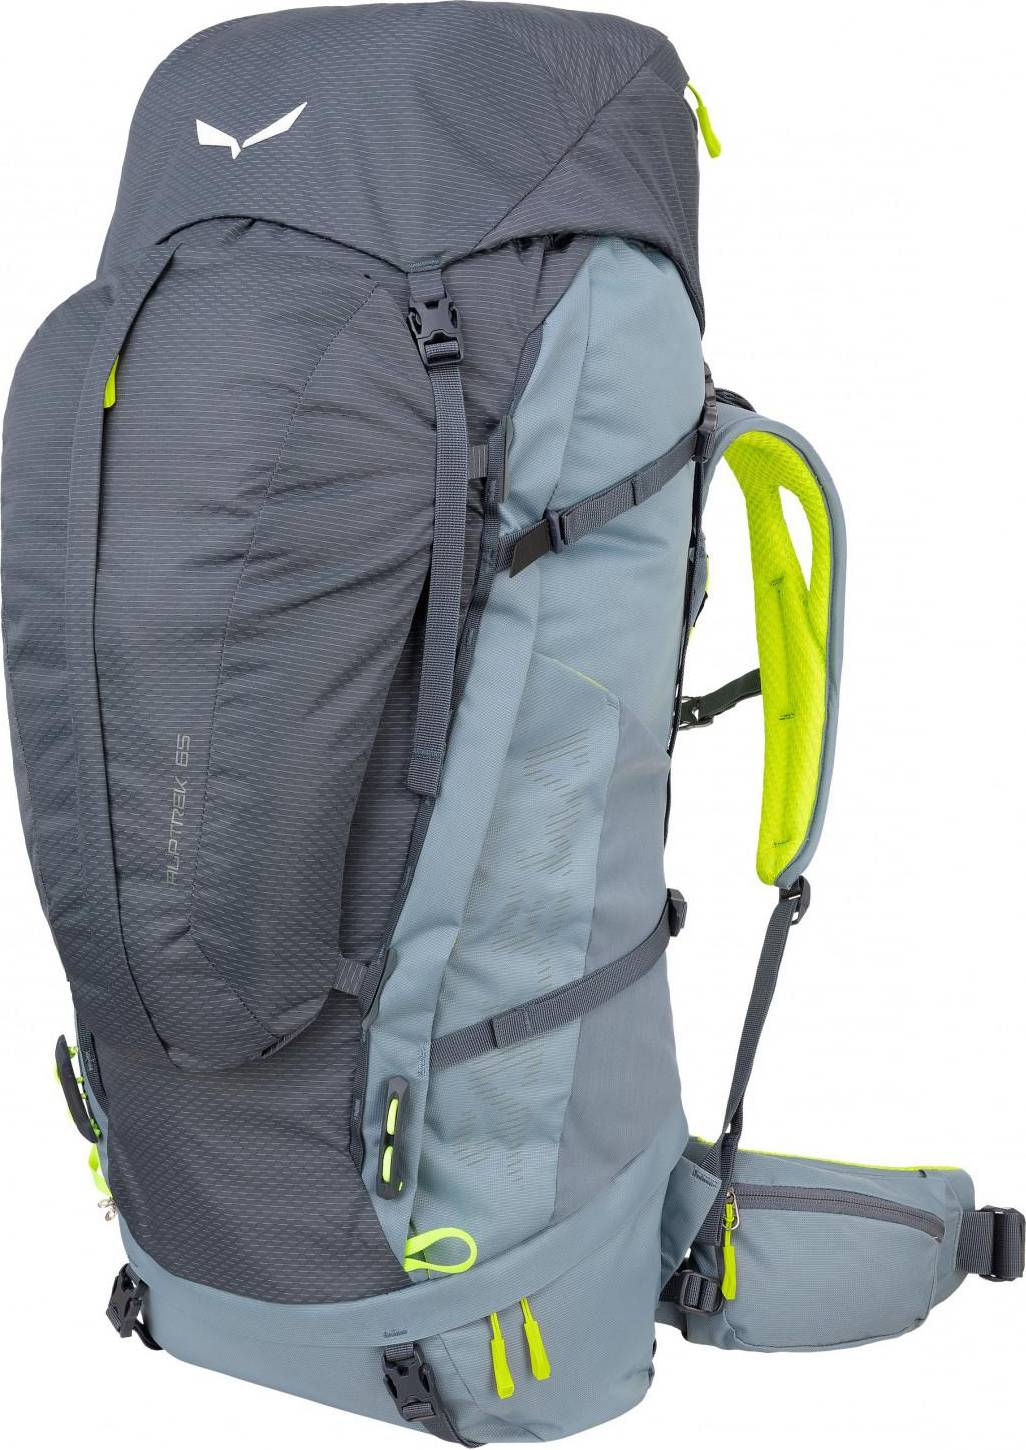  Bild på Salewa Alptrek 65+10L Pro Backpack - Grey/Ombre Blue/Flintstone ryggsäck